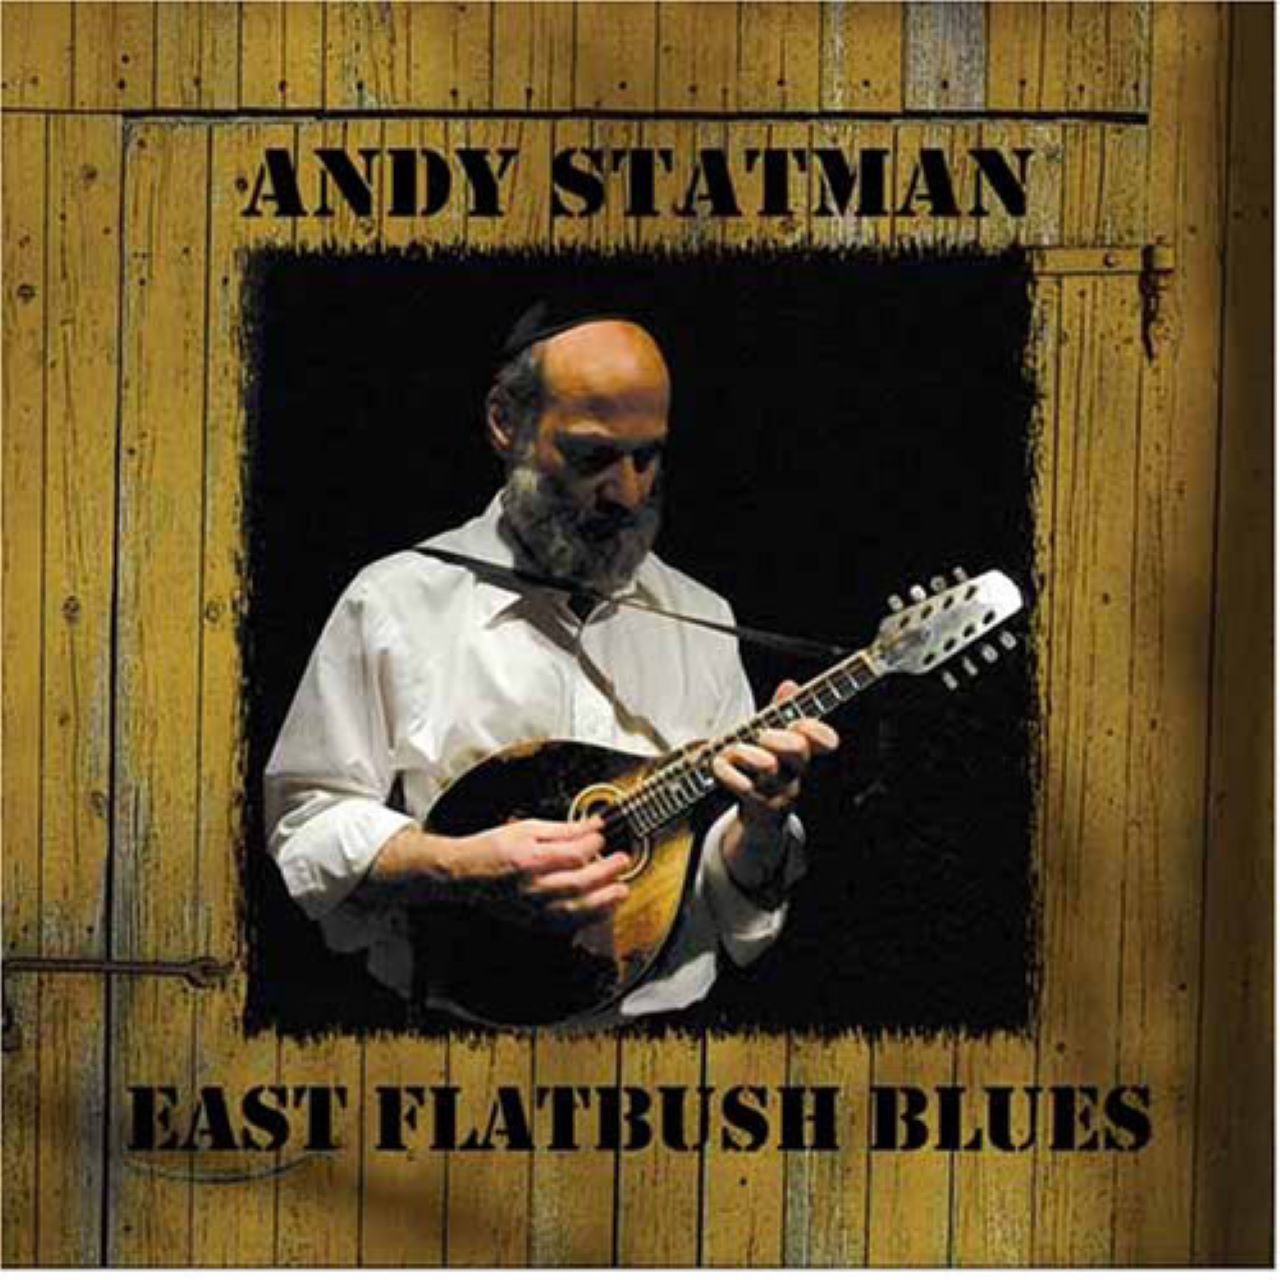 Andy Statman - East Flatbush Blues cover album